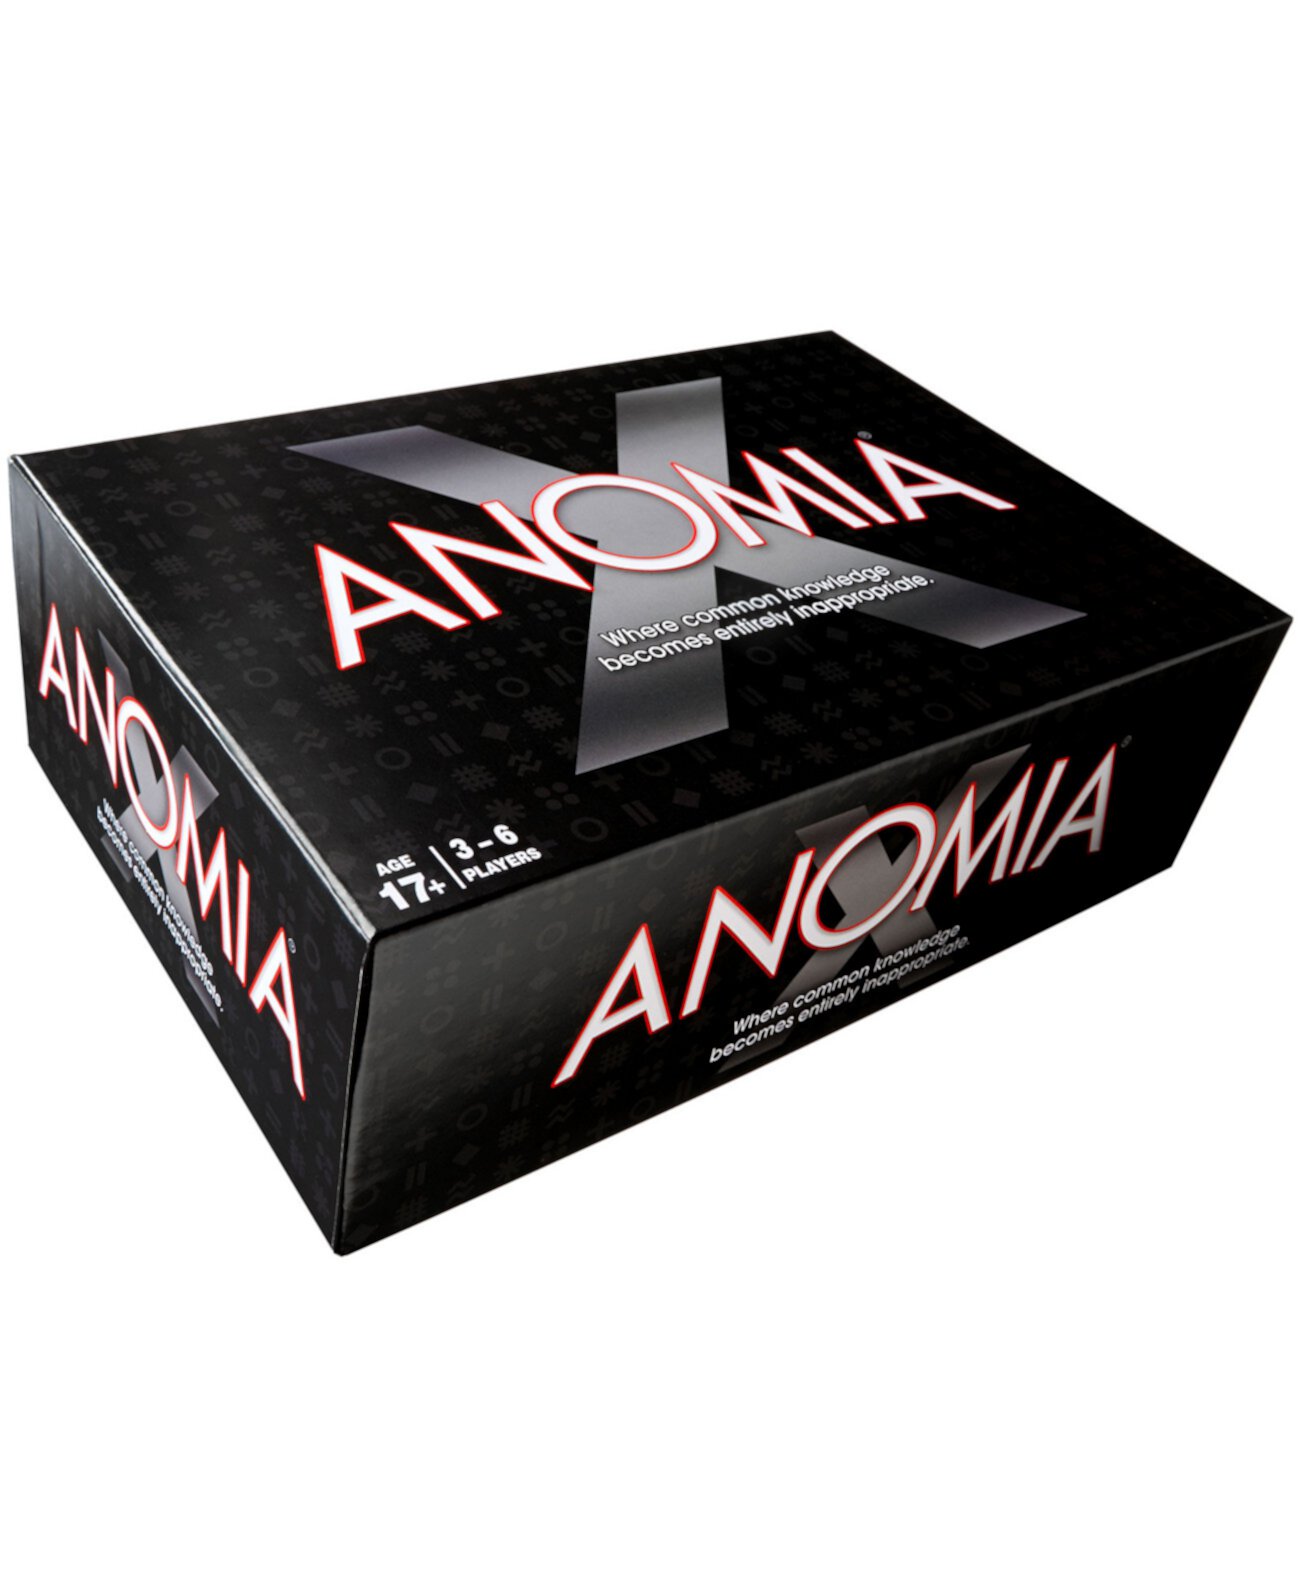 Аномия Х Anomia Press